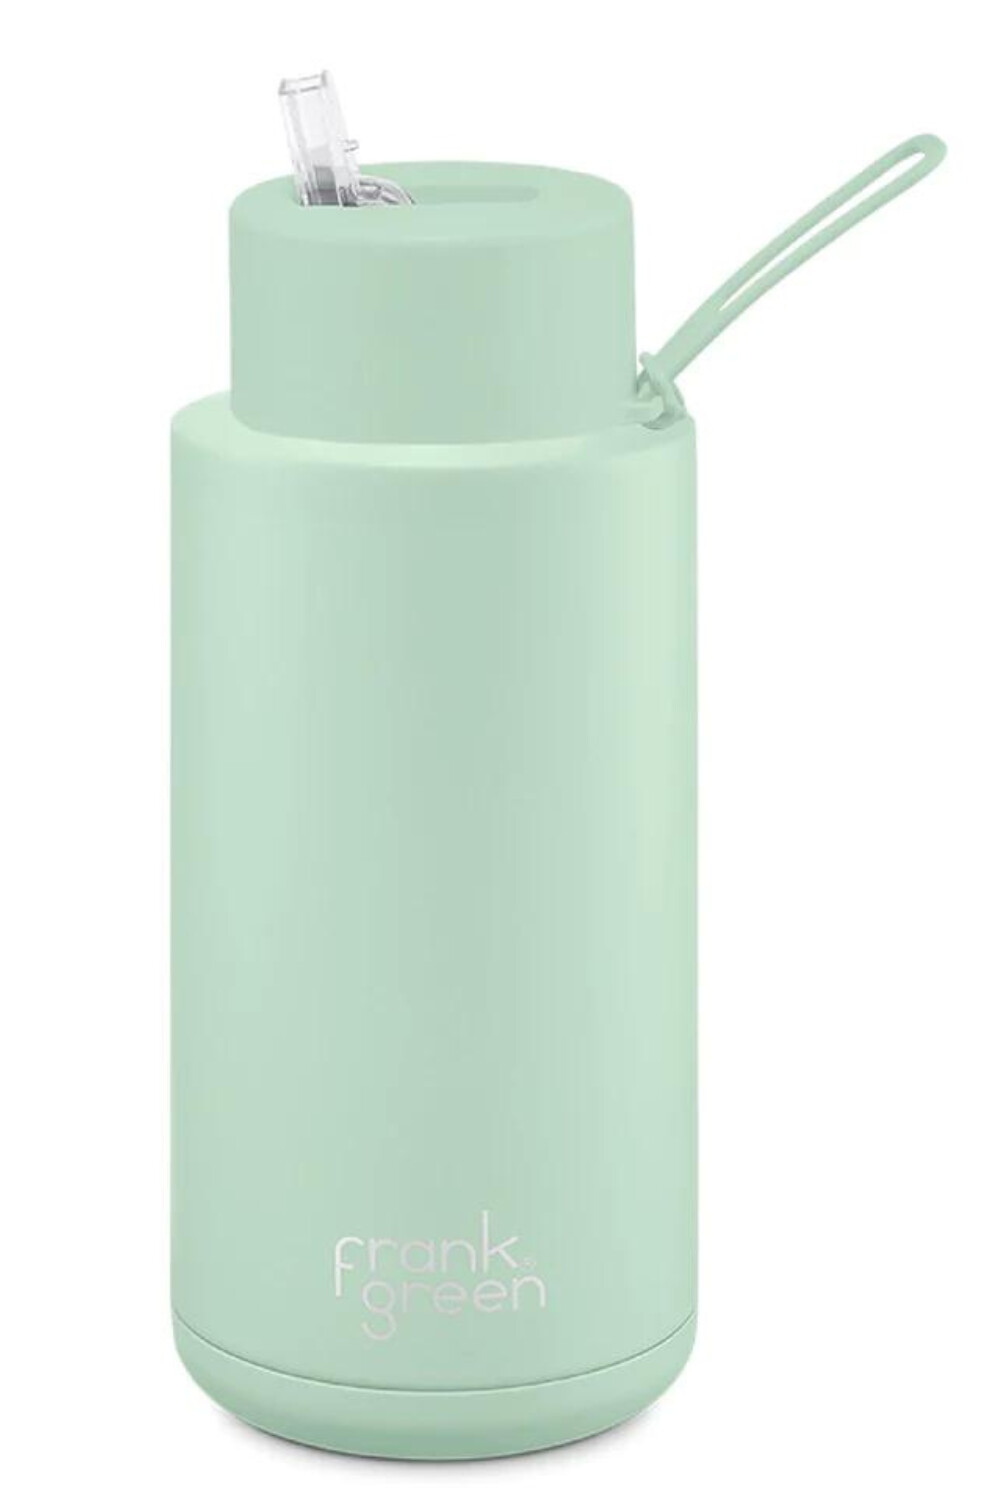 Frank Green Limited Edition Ceramic Reusable Bottle - 34oz / 1000mL - Mint Gelato